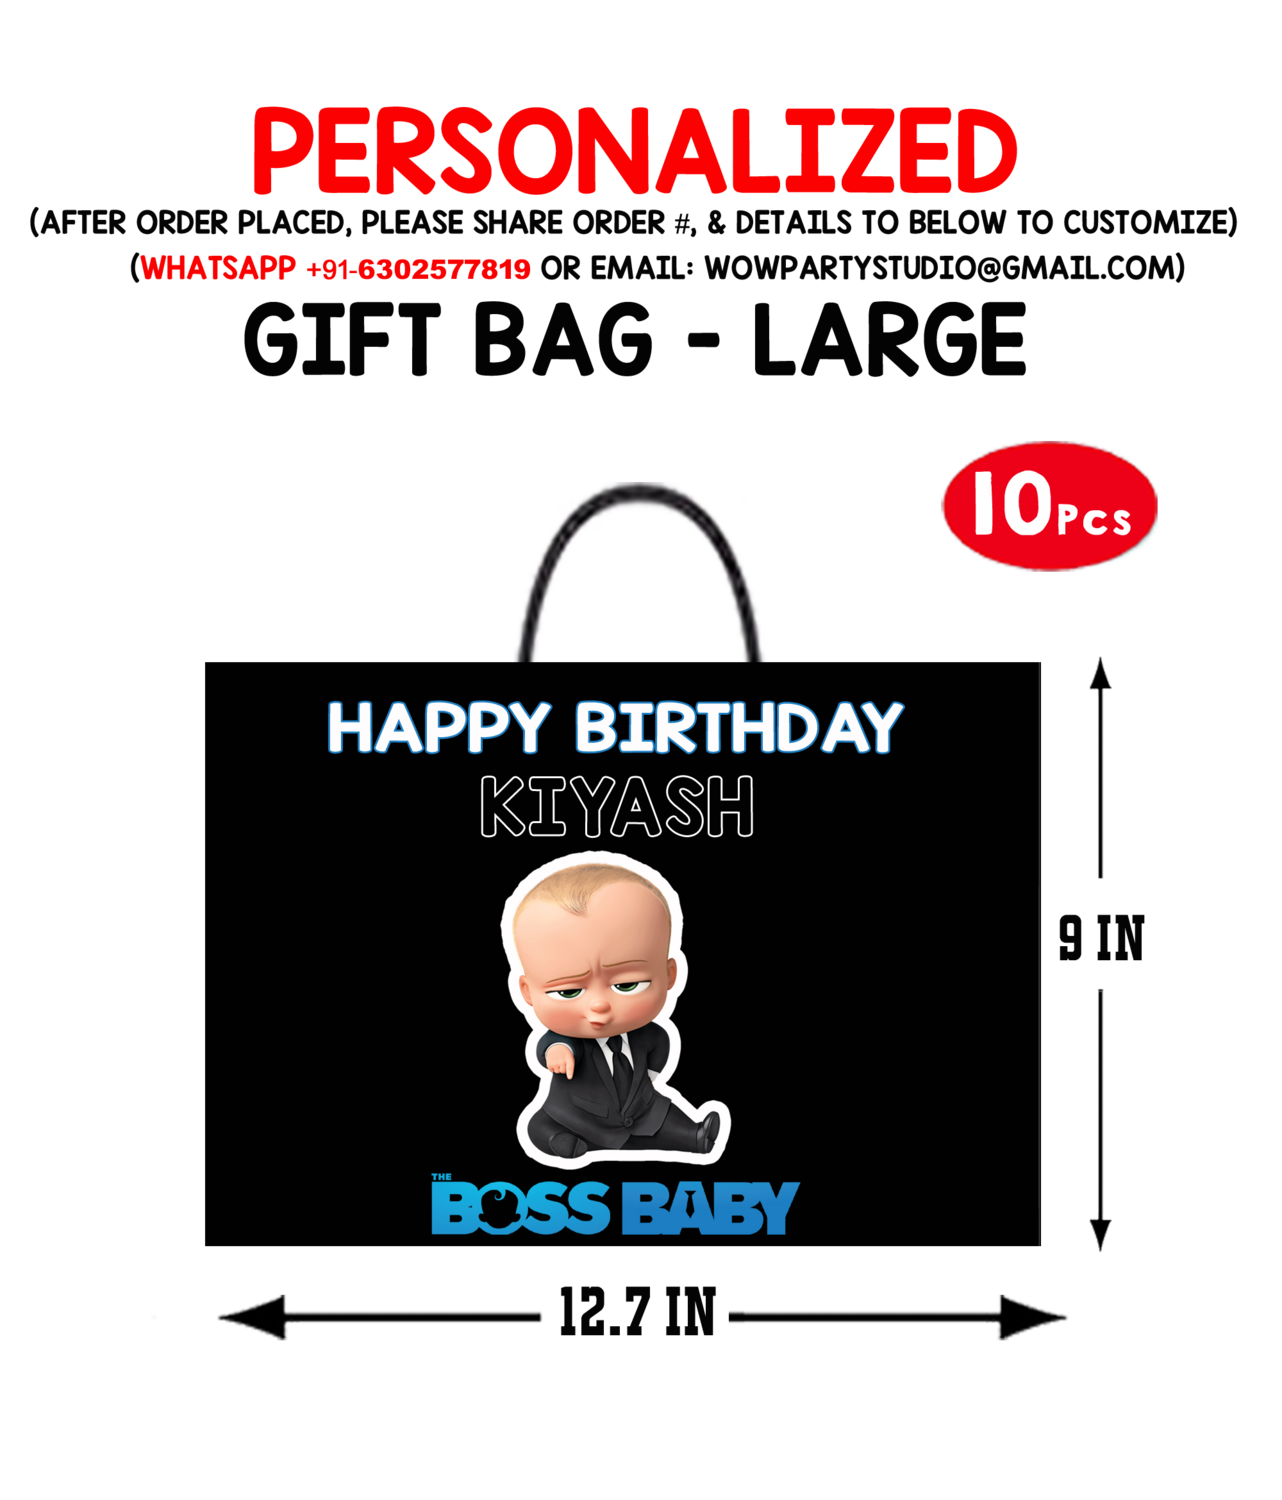 Boss Baby Gift Bag - Large (10 Pcs)